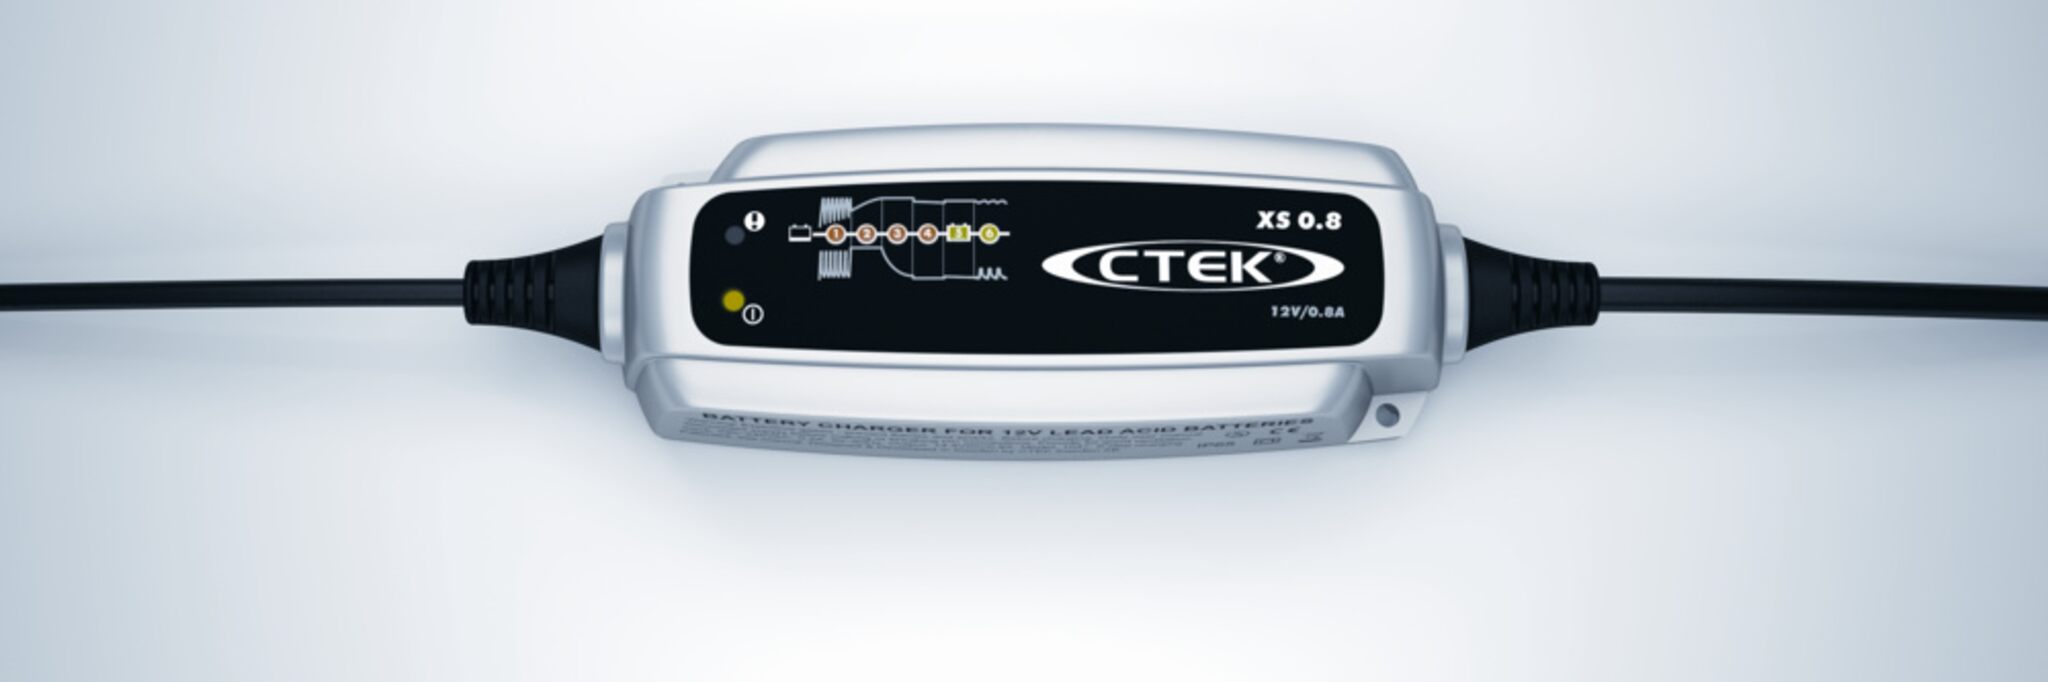 CTEK battery charger MXS 10